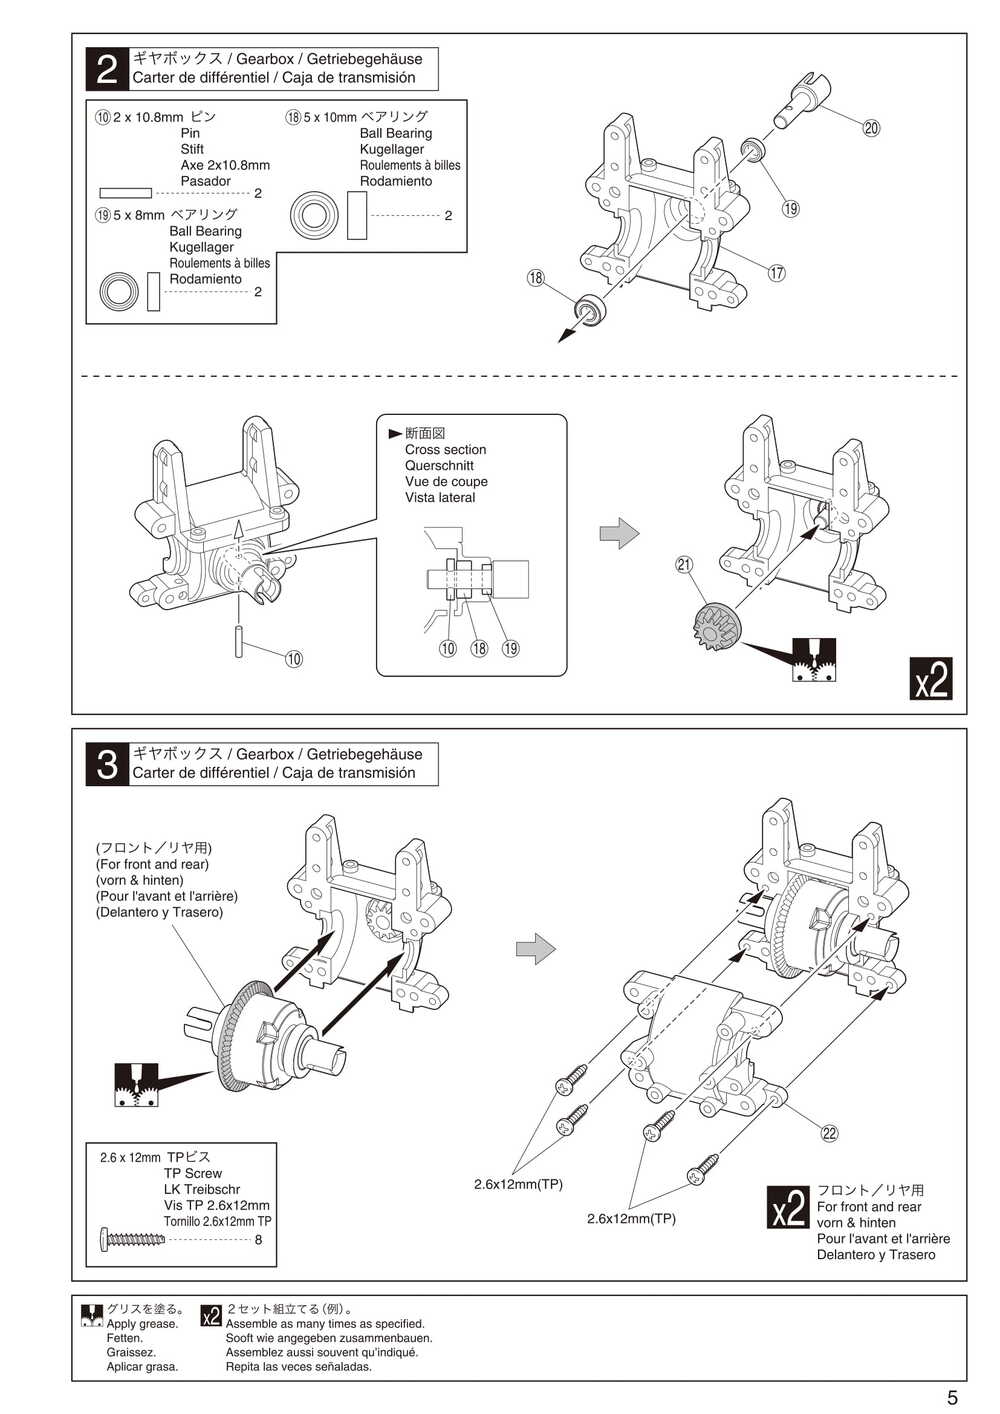 Kyosho - 31096F DBX - Manual - Page 05